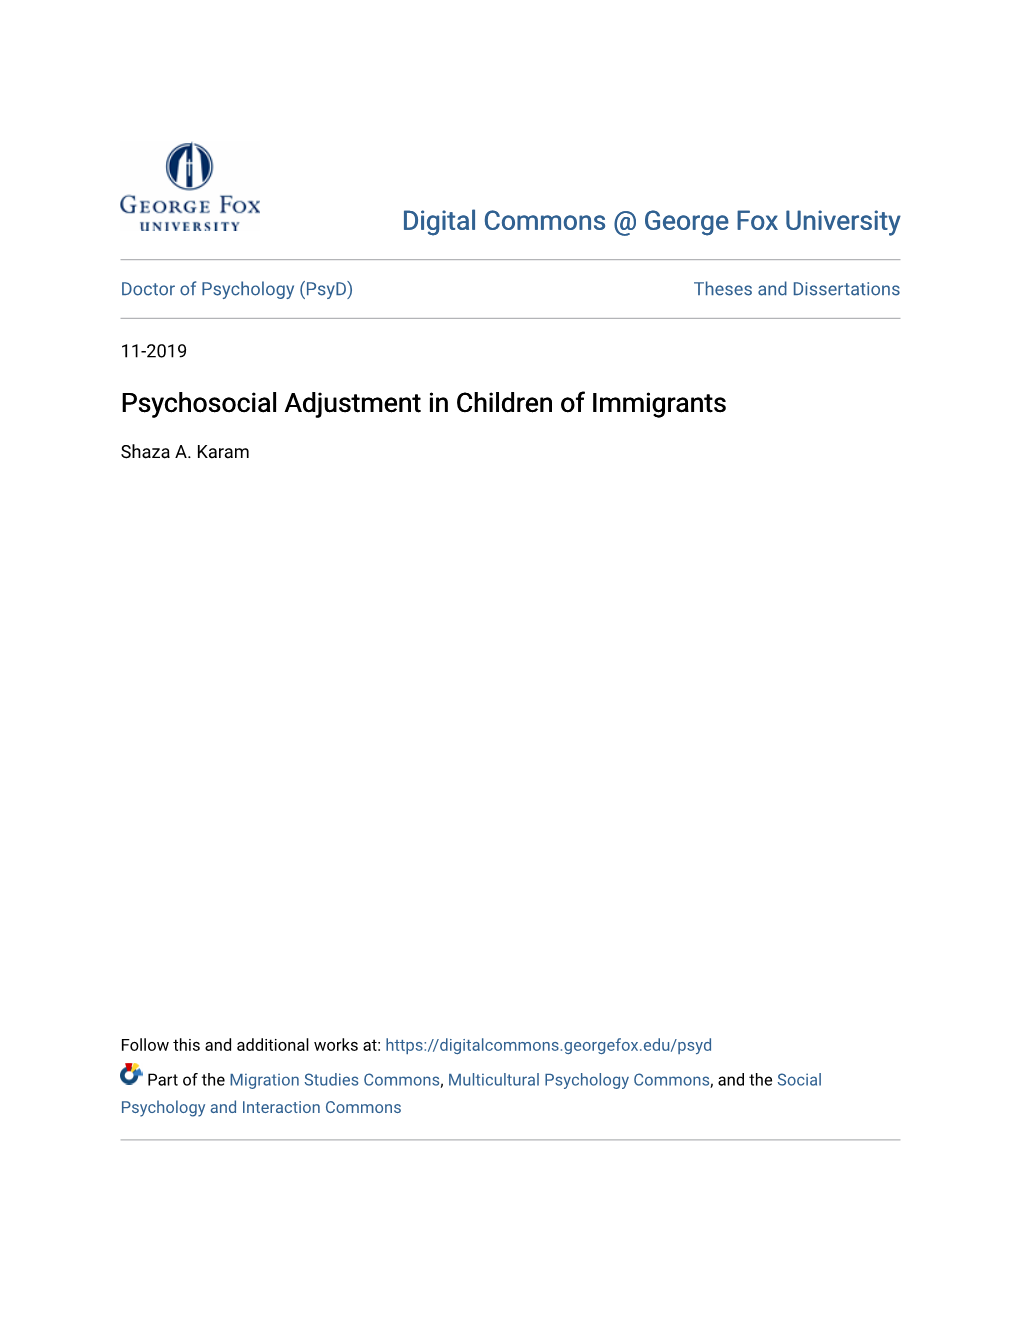 Psychosocial Adjustment in Children of Immigrants